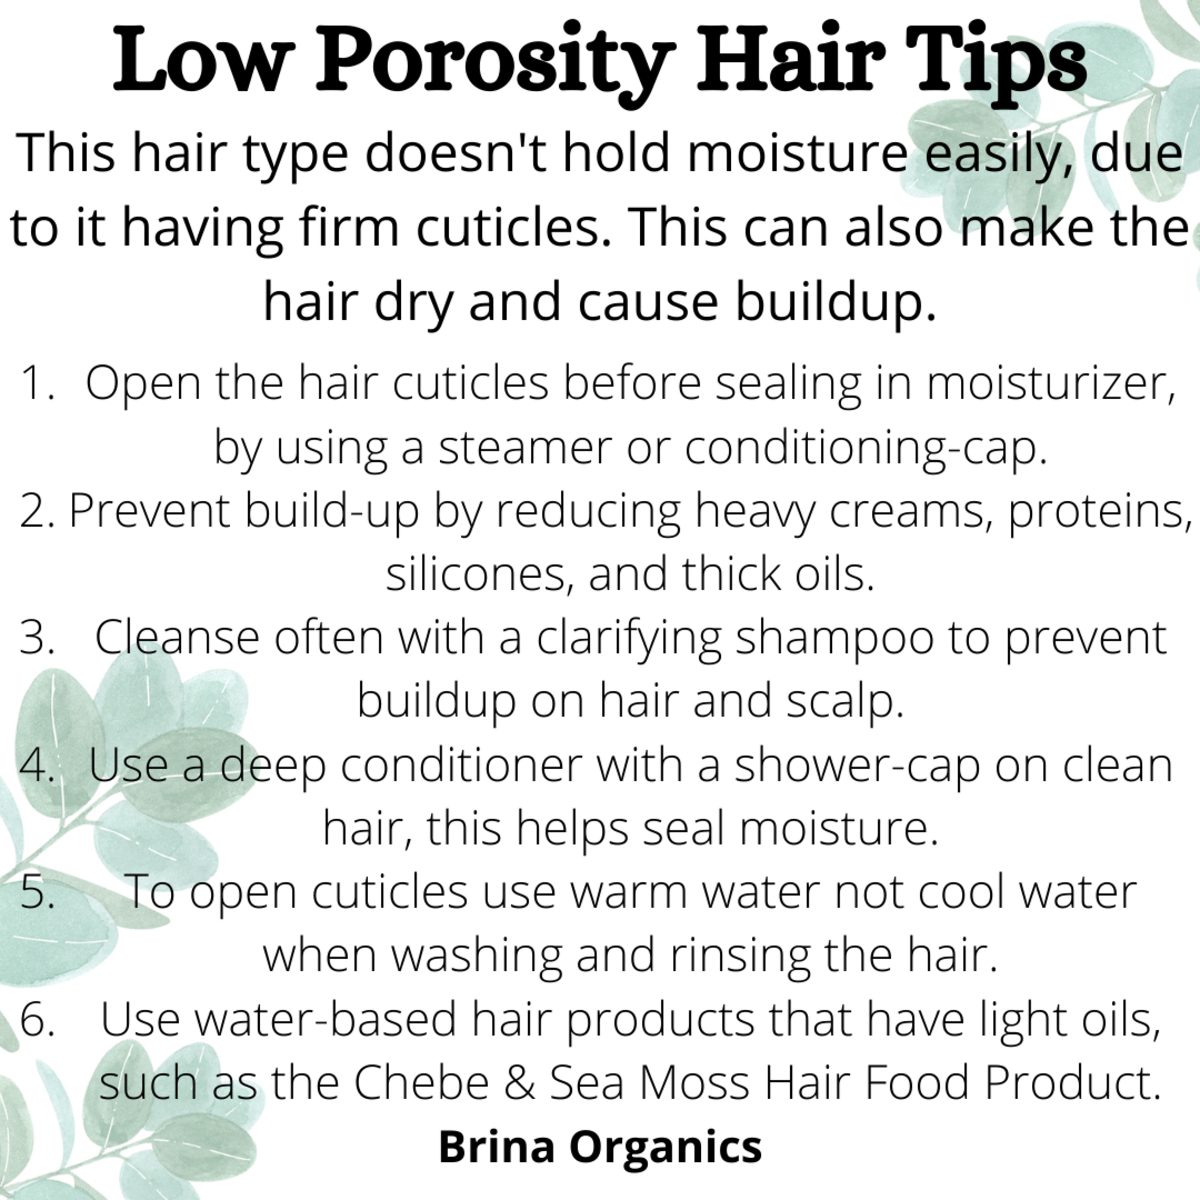 Low Porosity Hair Tips